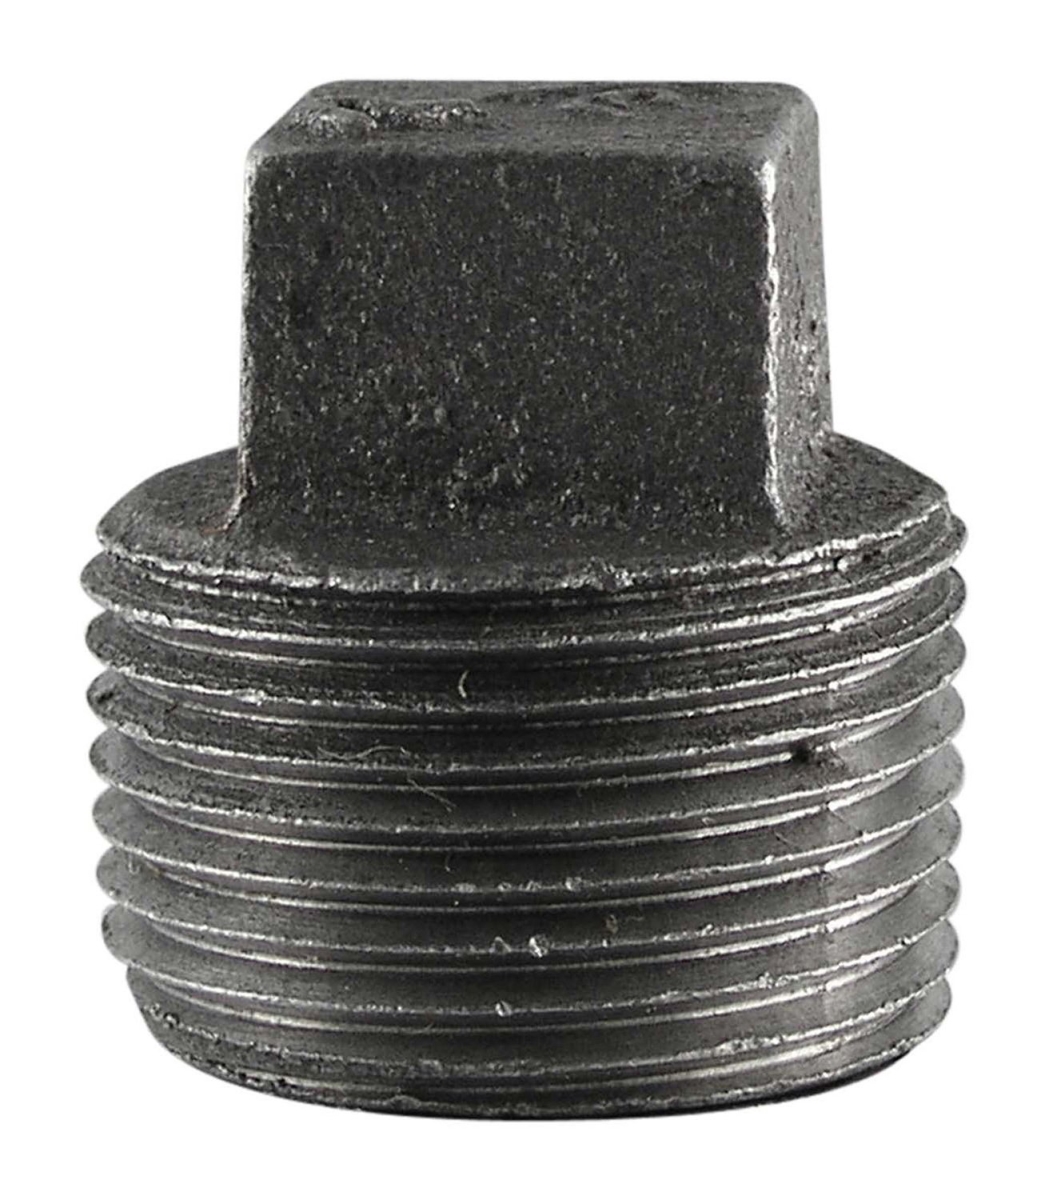 521-806hn 1.25 In. Black Square Head Plugs